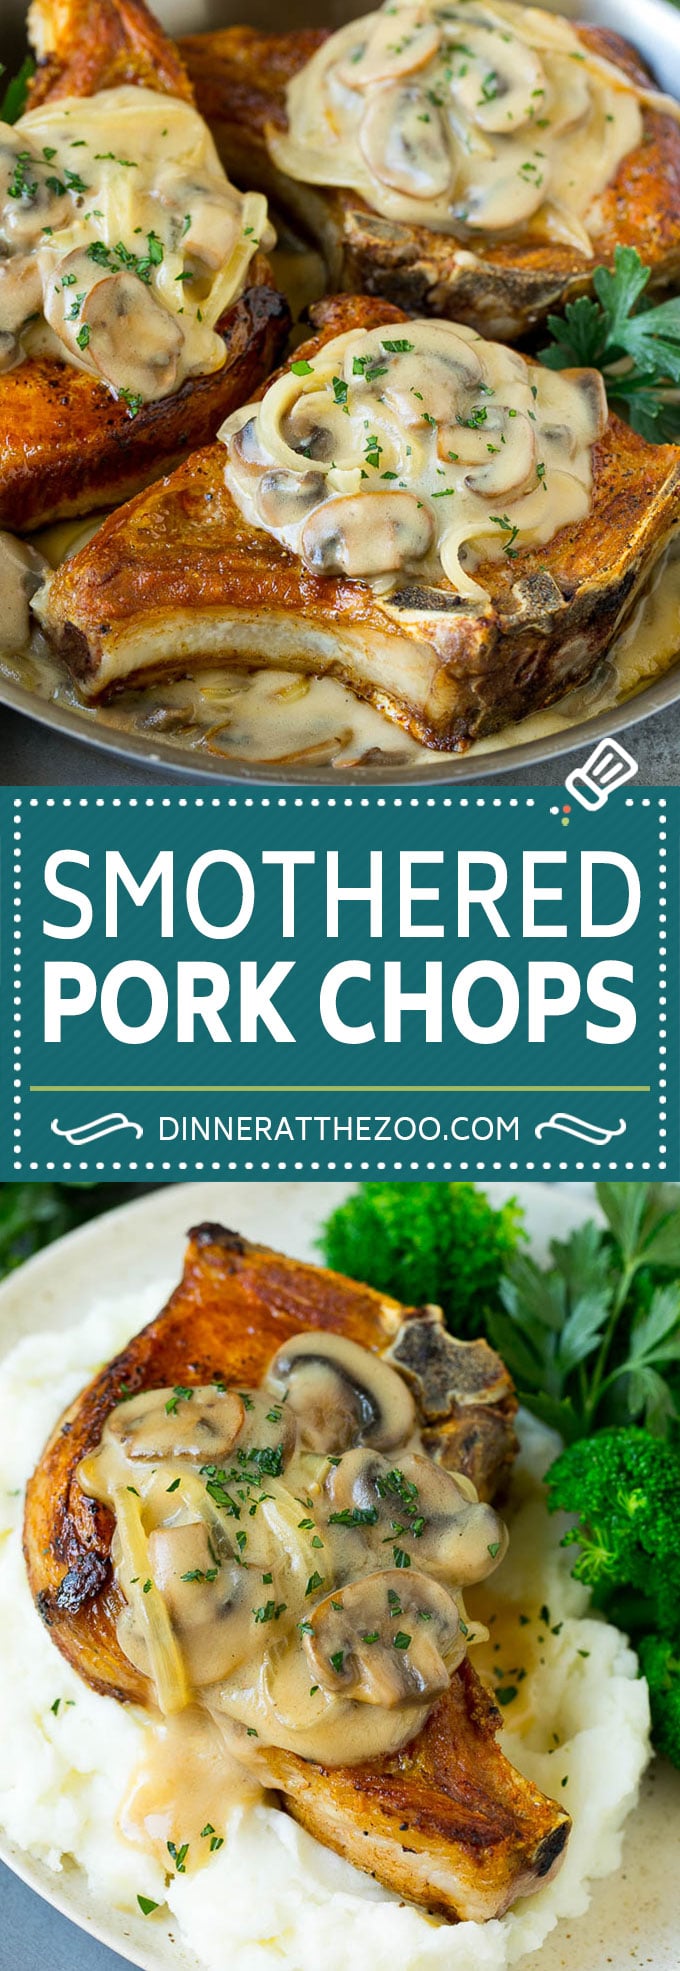 Smothered Pork Chops Recipe | Mushroom Pork Chops #pork #porkchops #mushrooms #gravy #dinner #dinneratthezoo